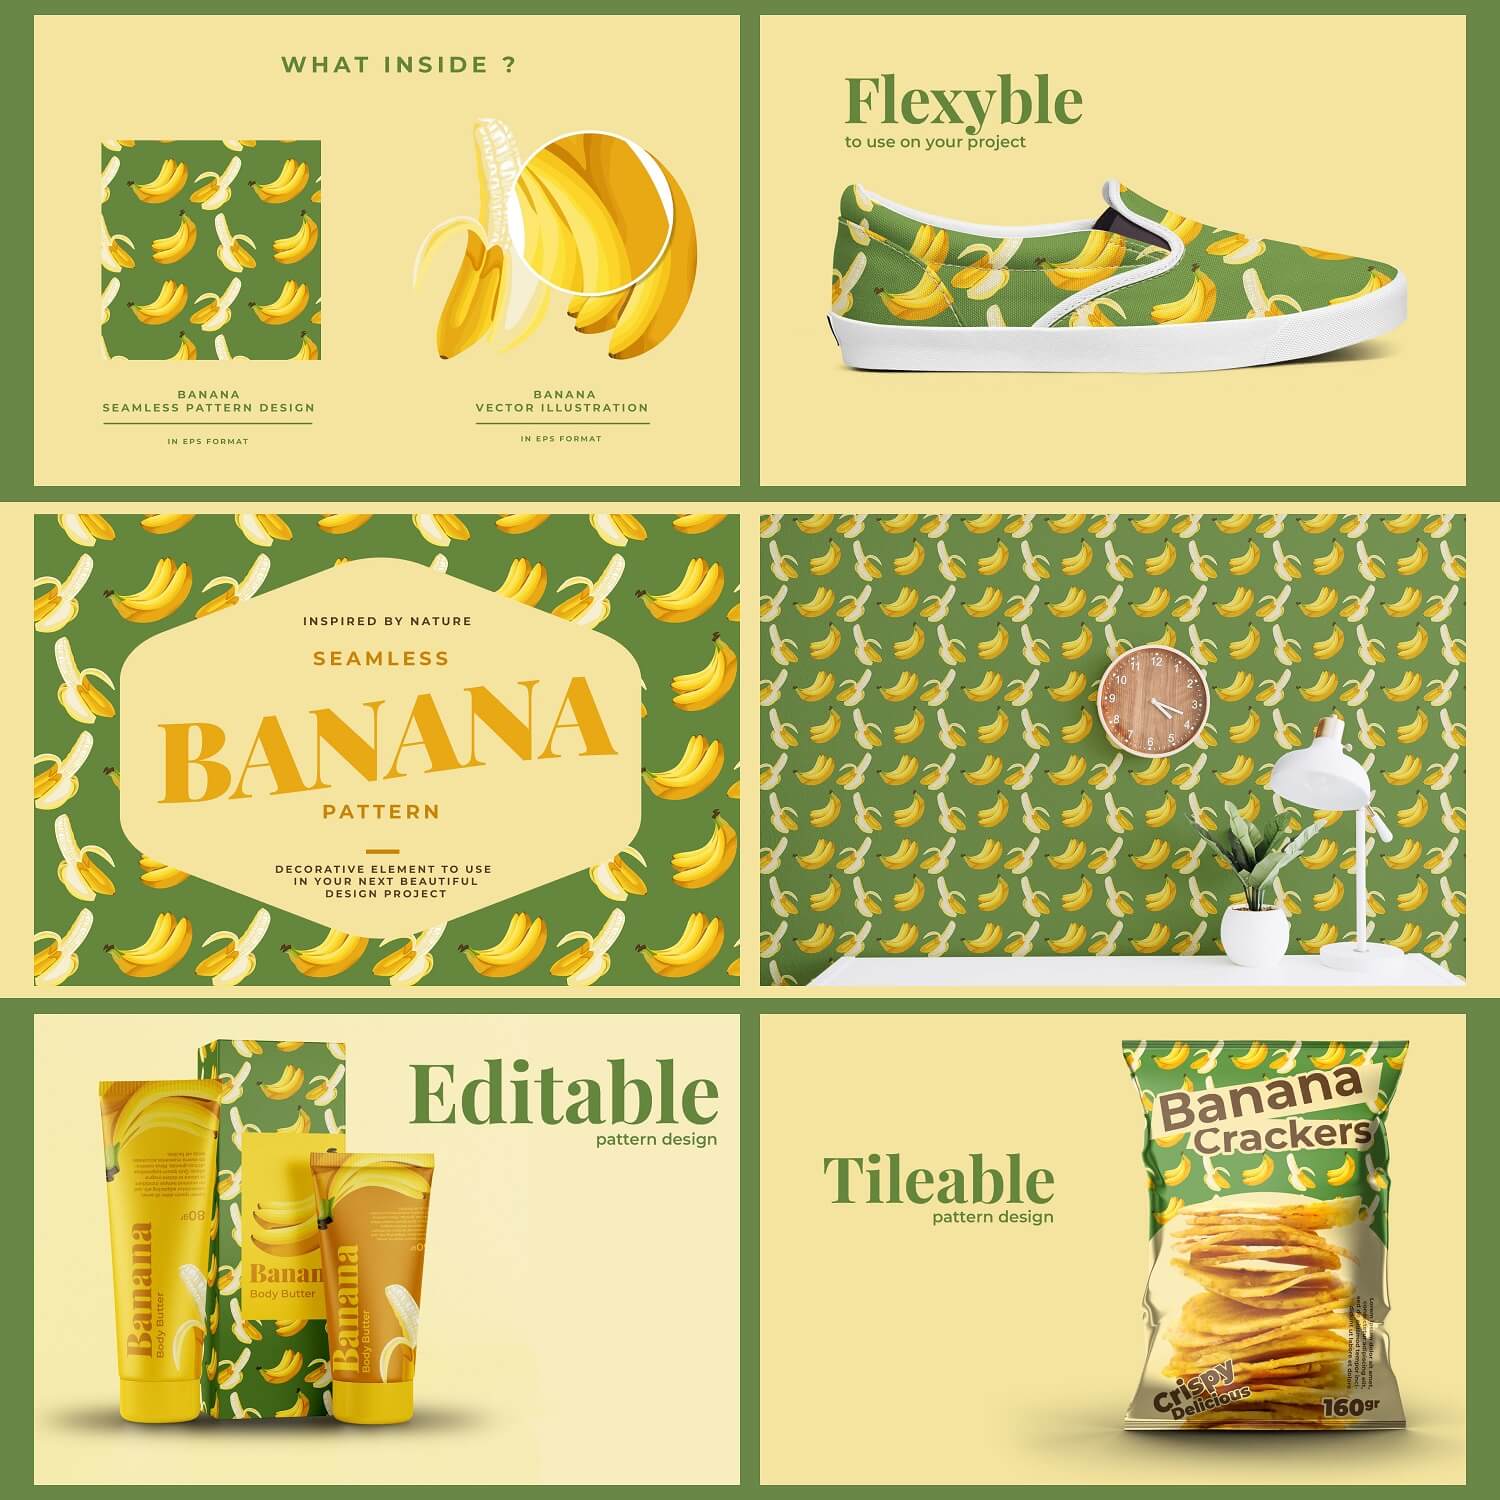 Inscription "Flexyble", "Editable", "Tileable" on the slides of seamless Banana pattern.